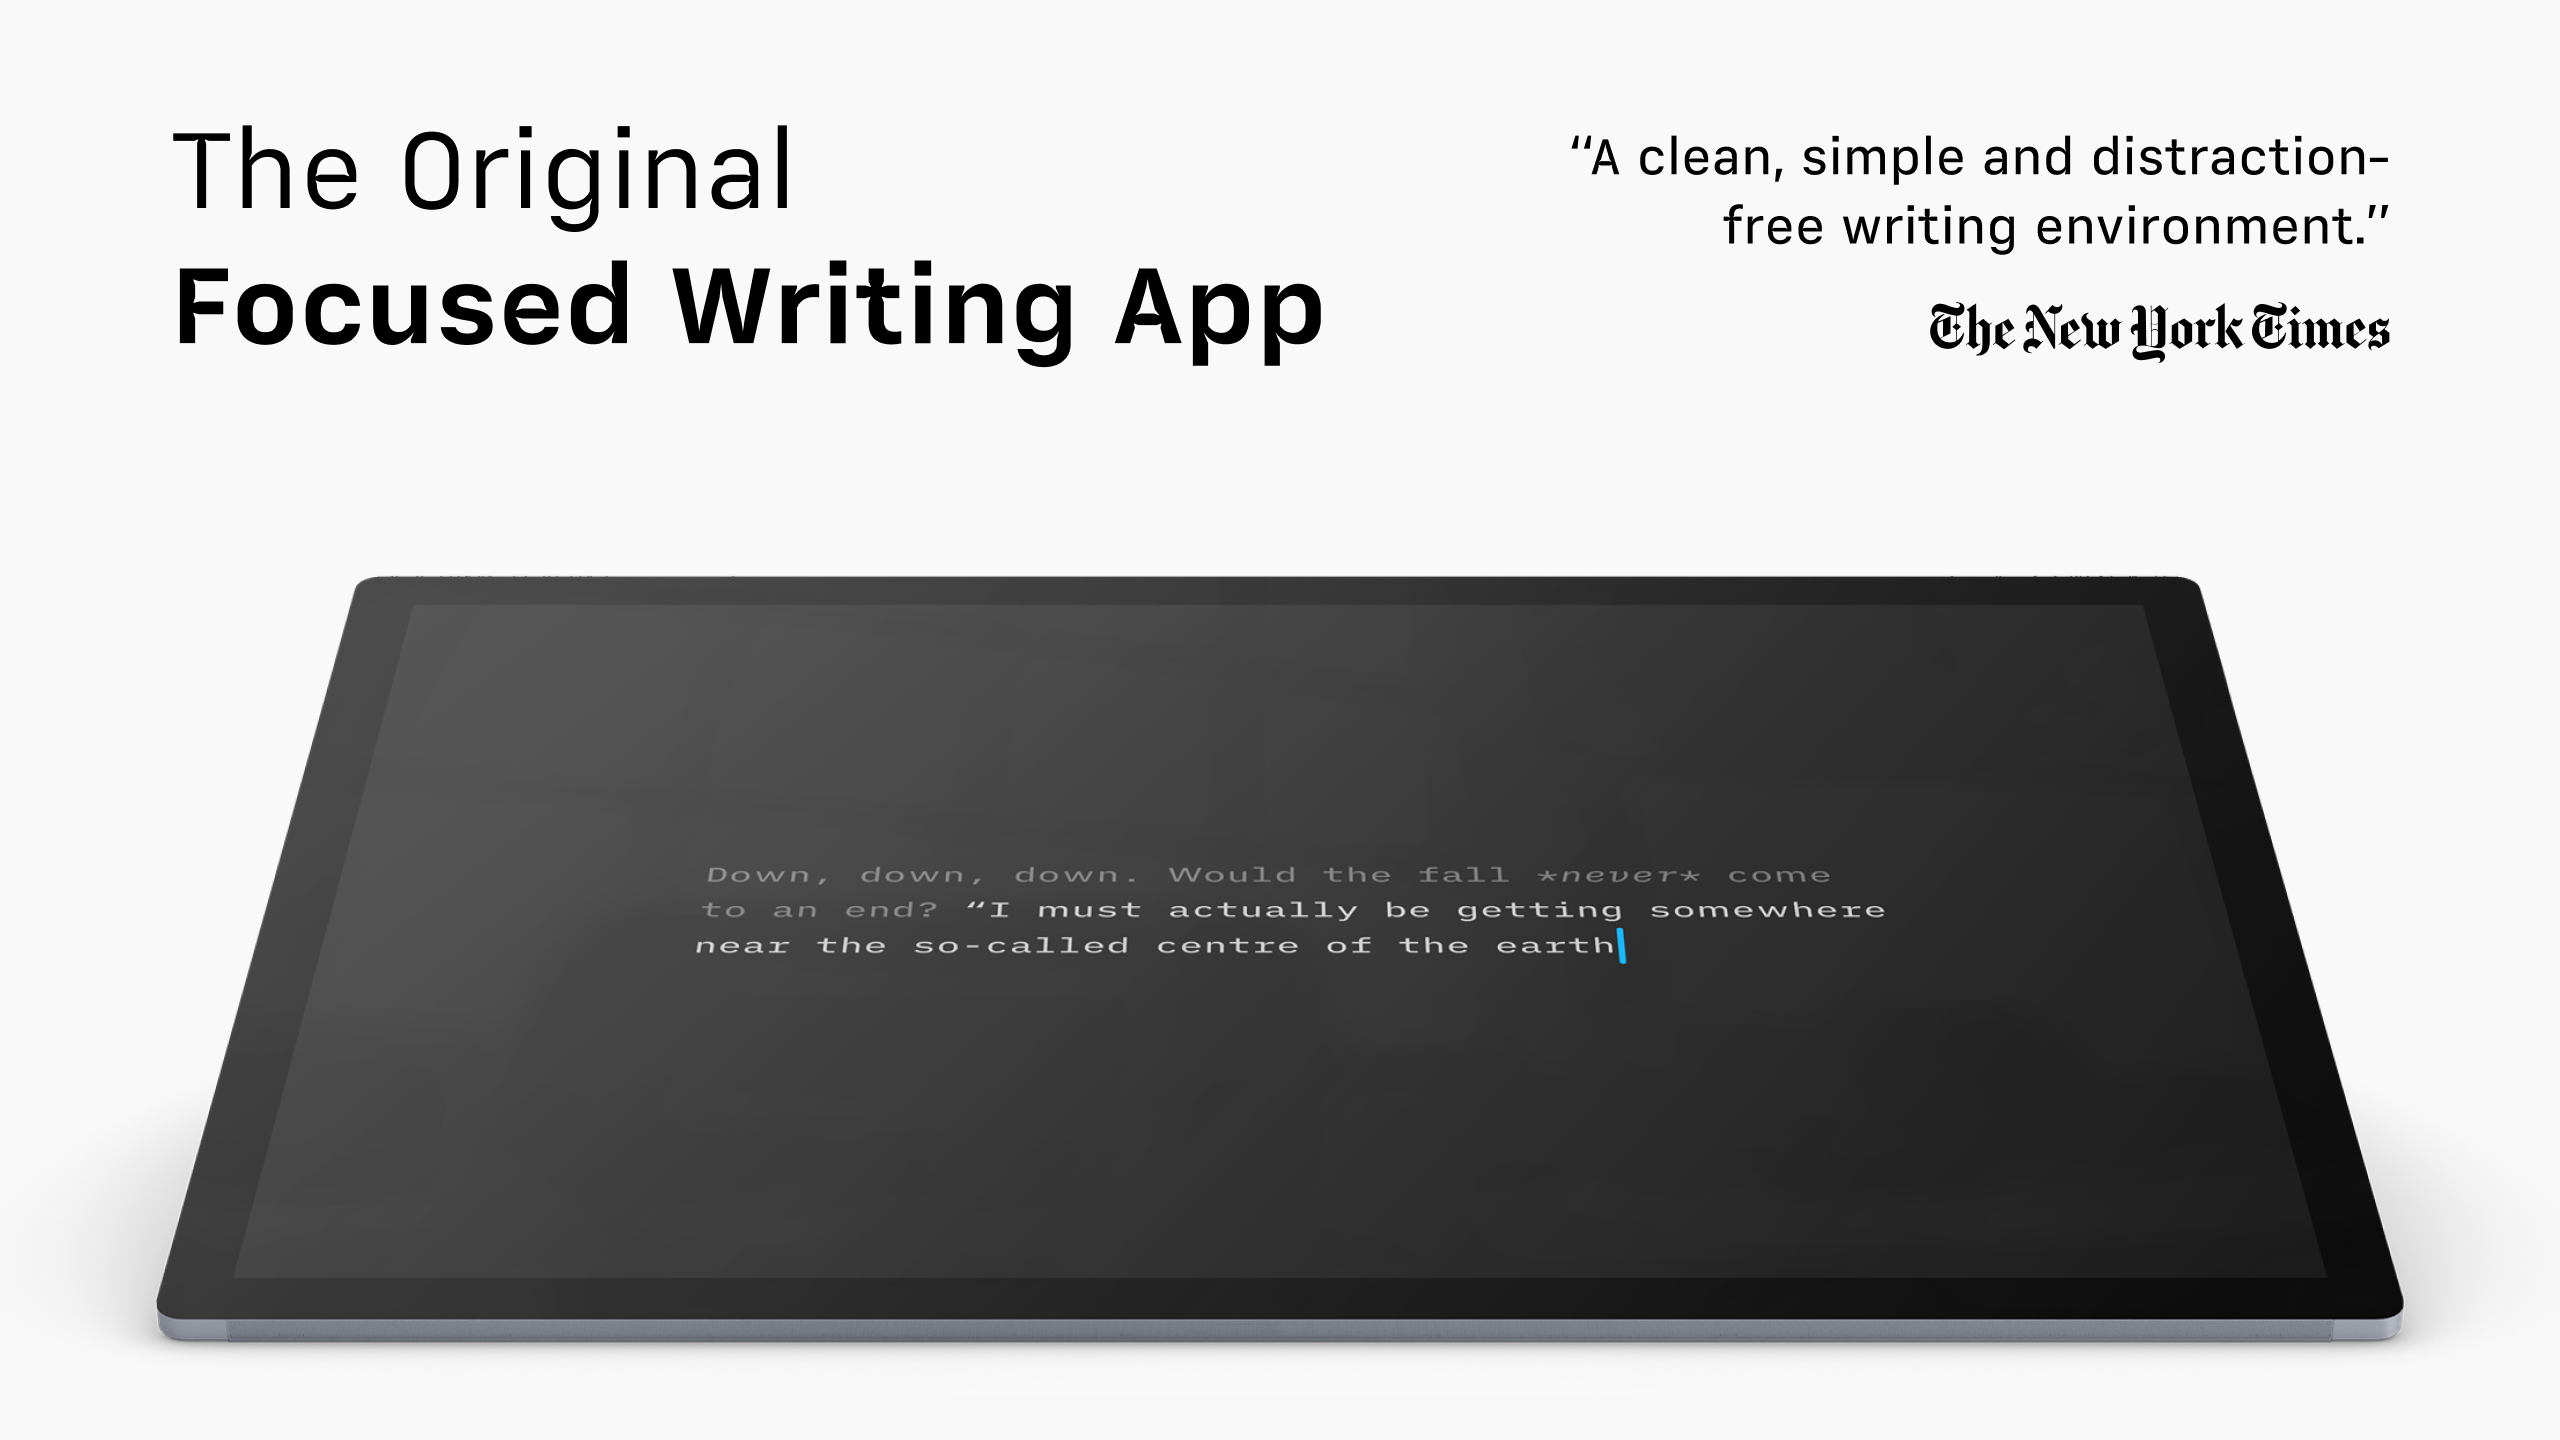 iWriter: English Writing Tool - Microsoft Apps